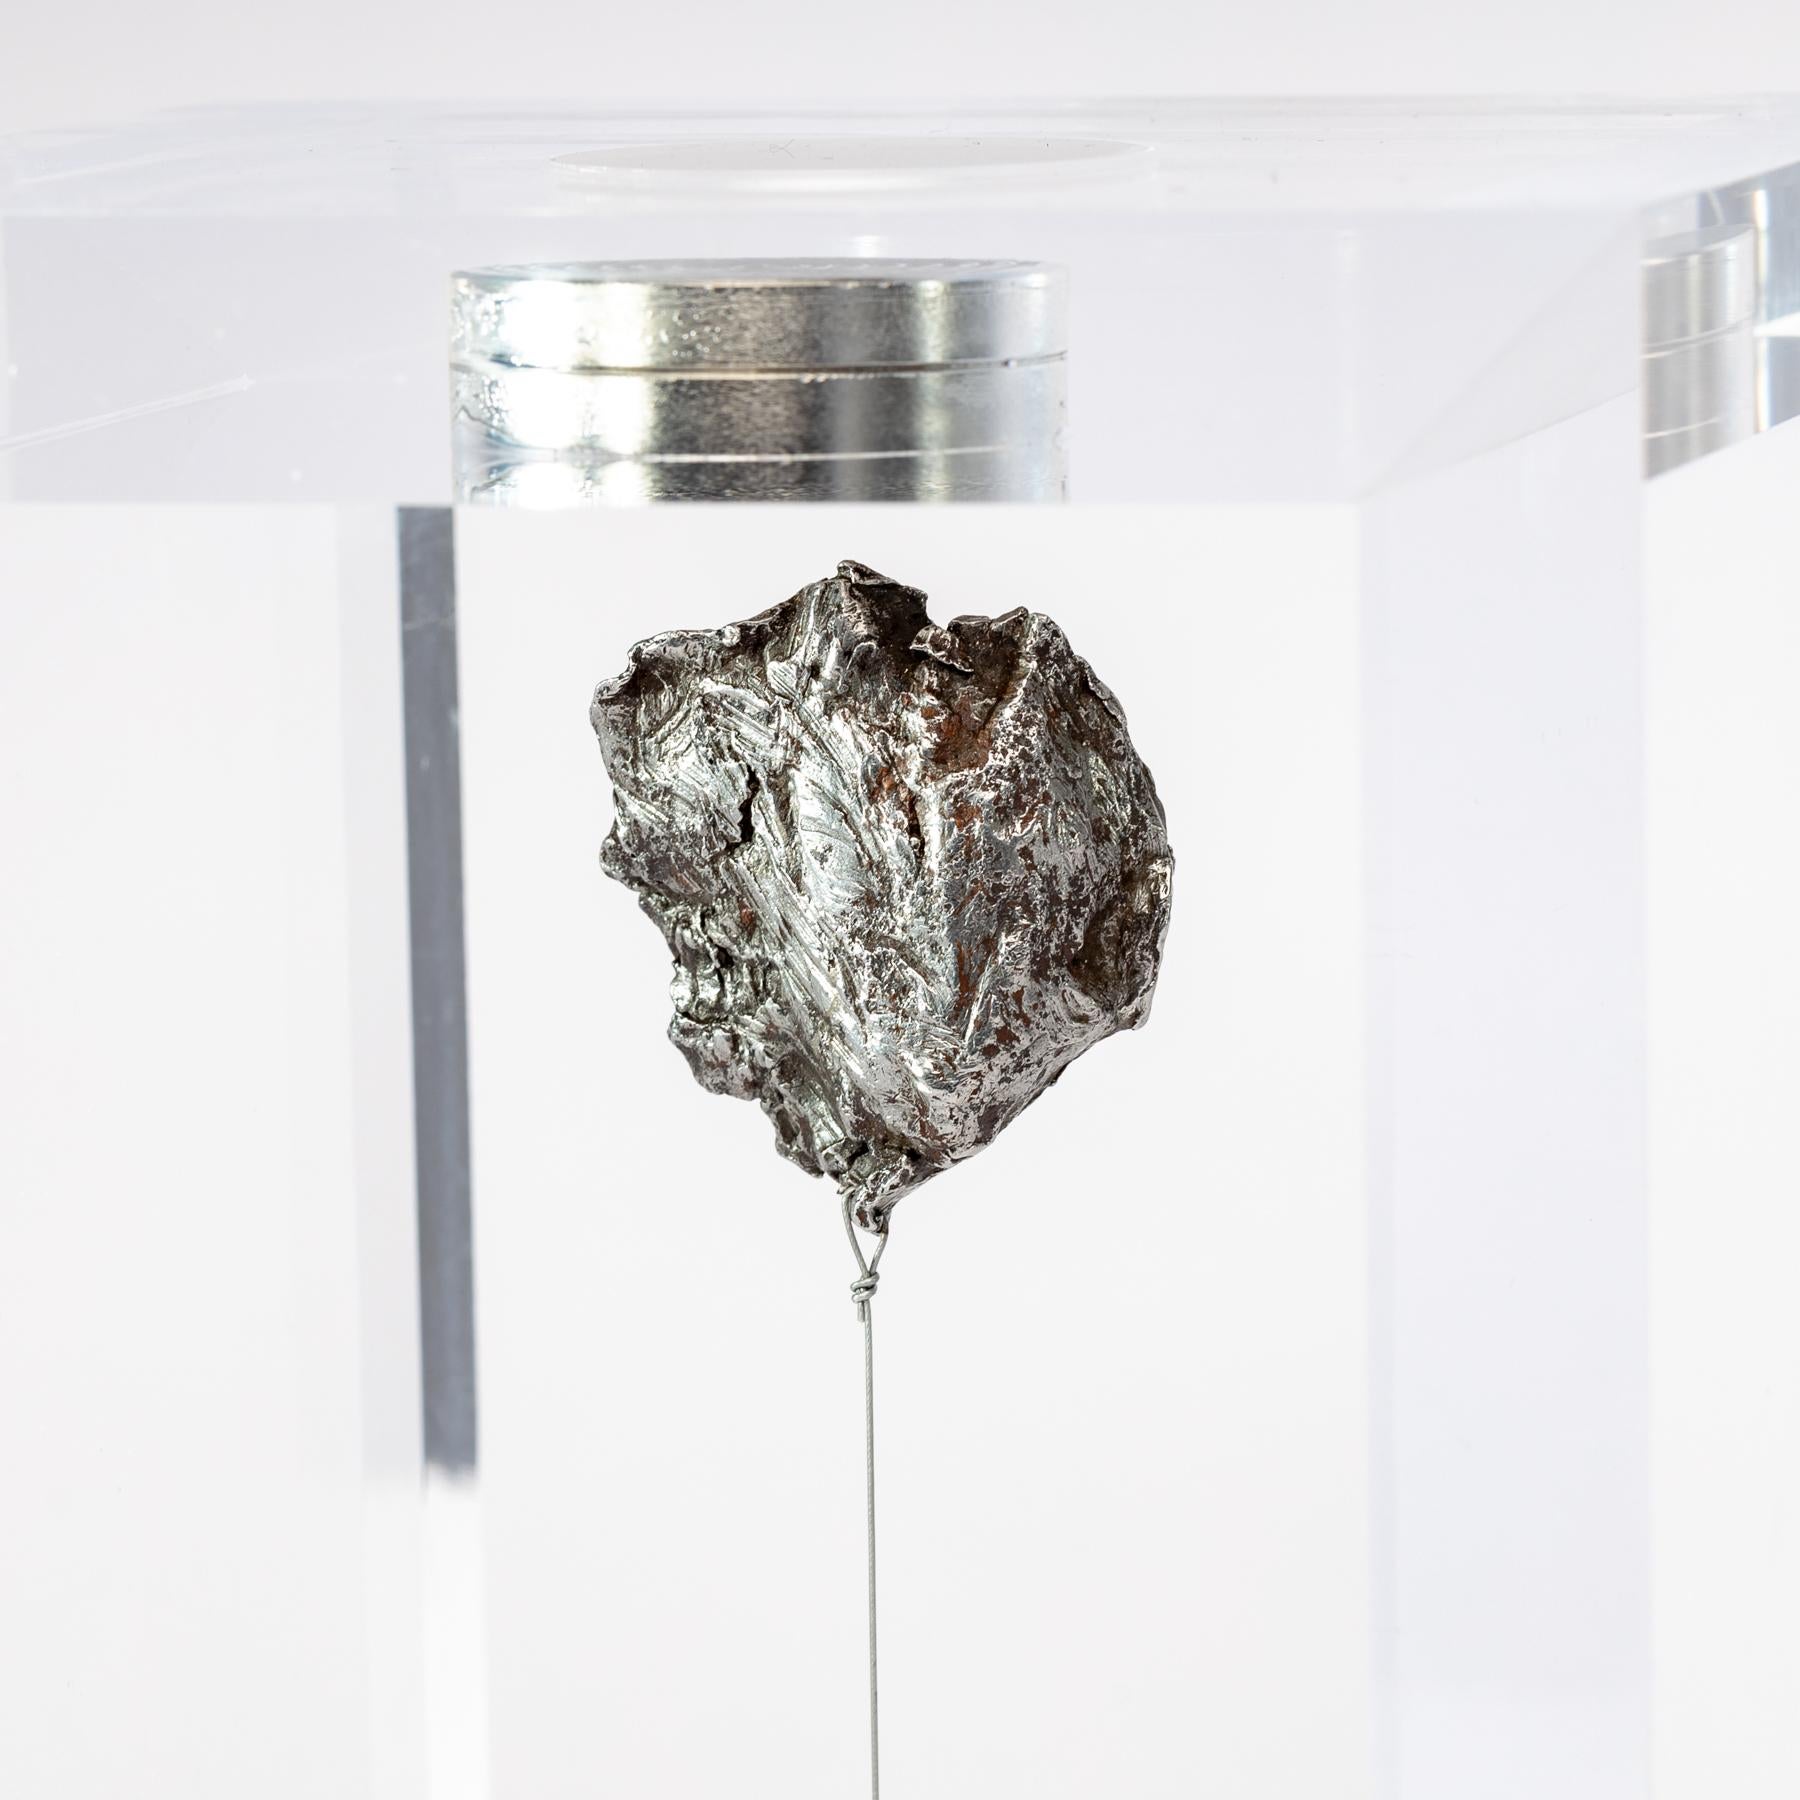 Original Design, Space Box, Russian Sikhote Alin Meteorite in Acrylic Box 2